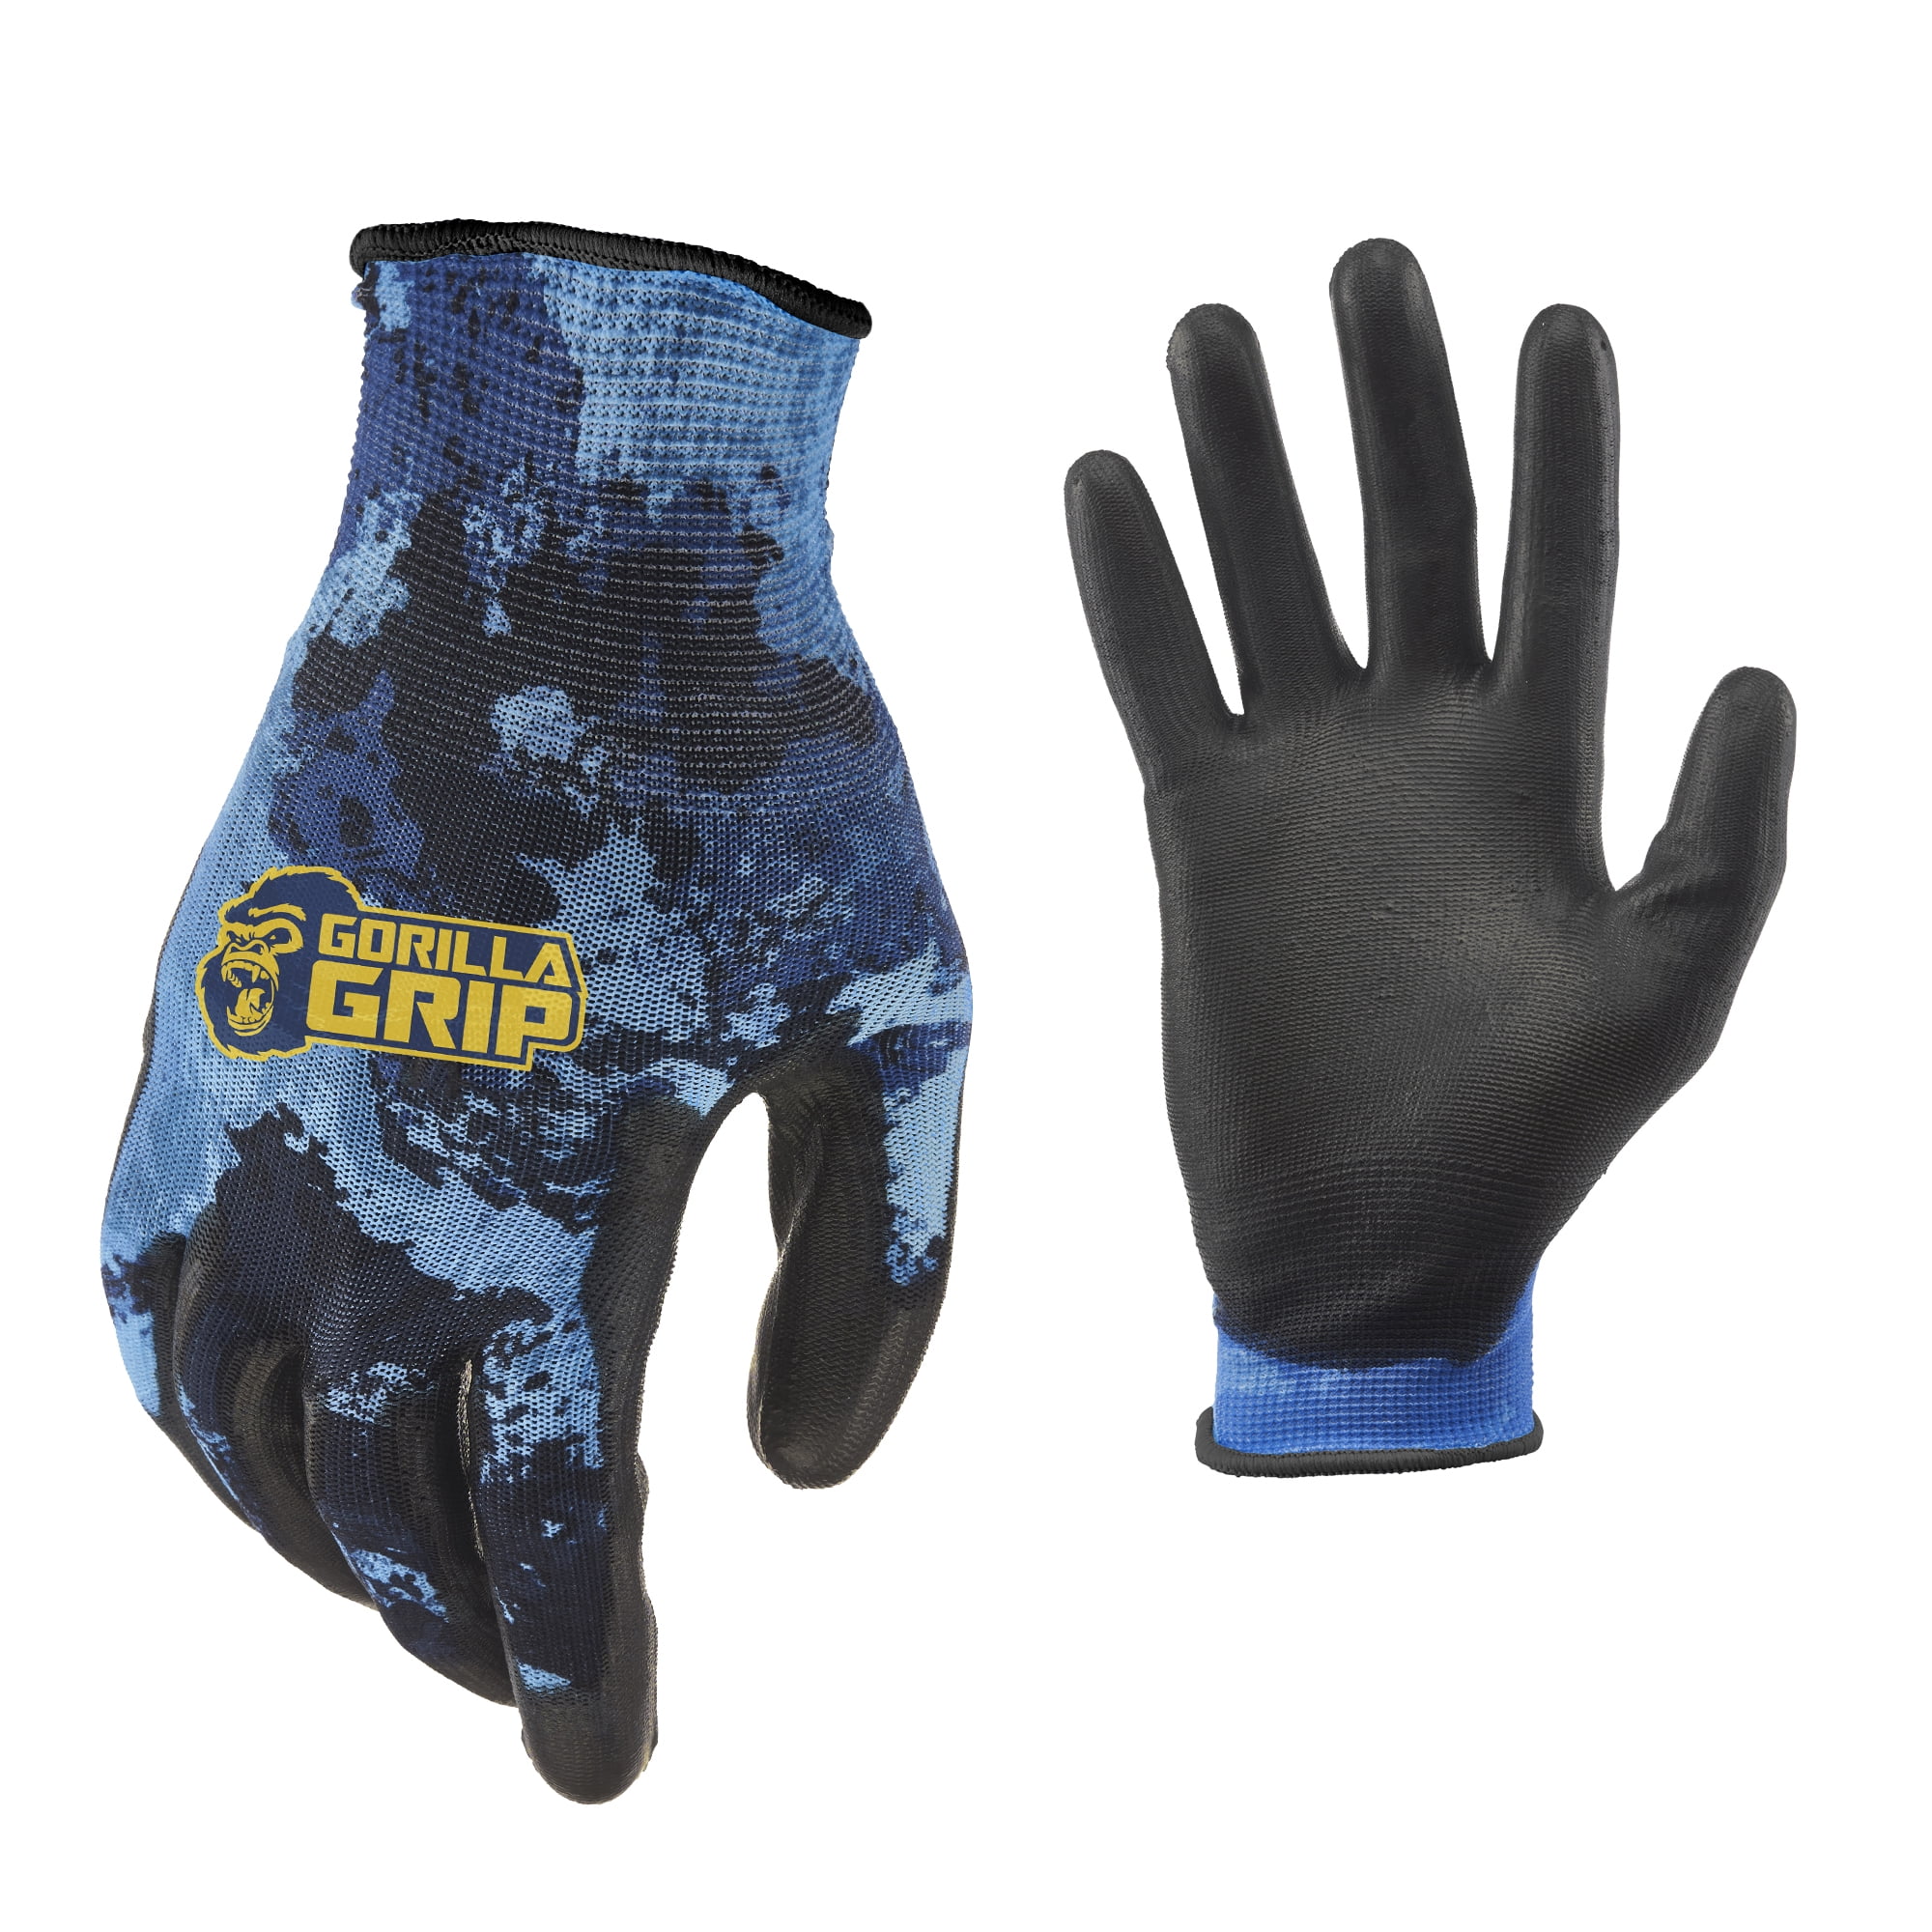 Gorilla Grip Veil Aqueous Blue, No Slip Fishing Gloves, XL, Model# 25148-26